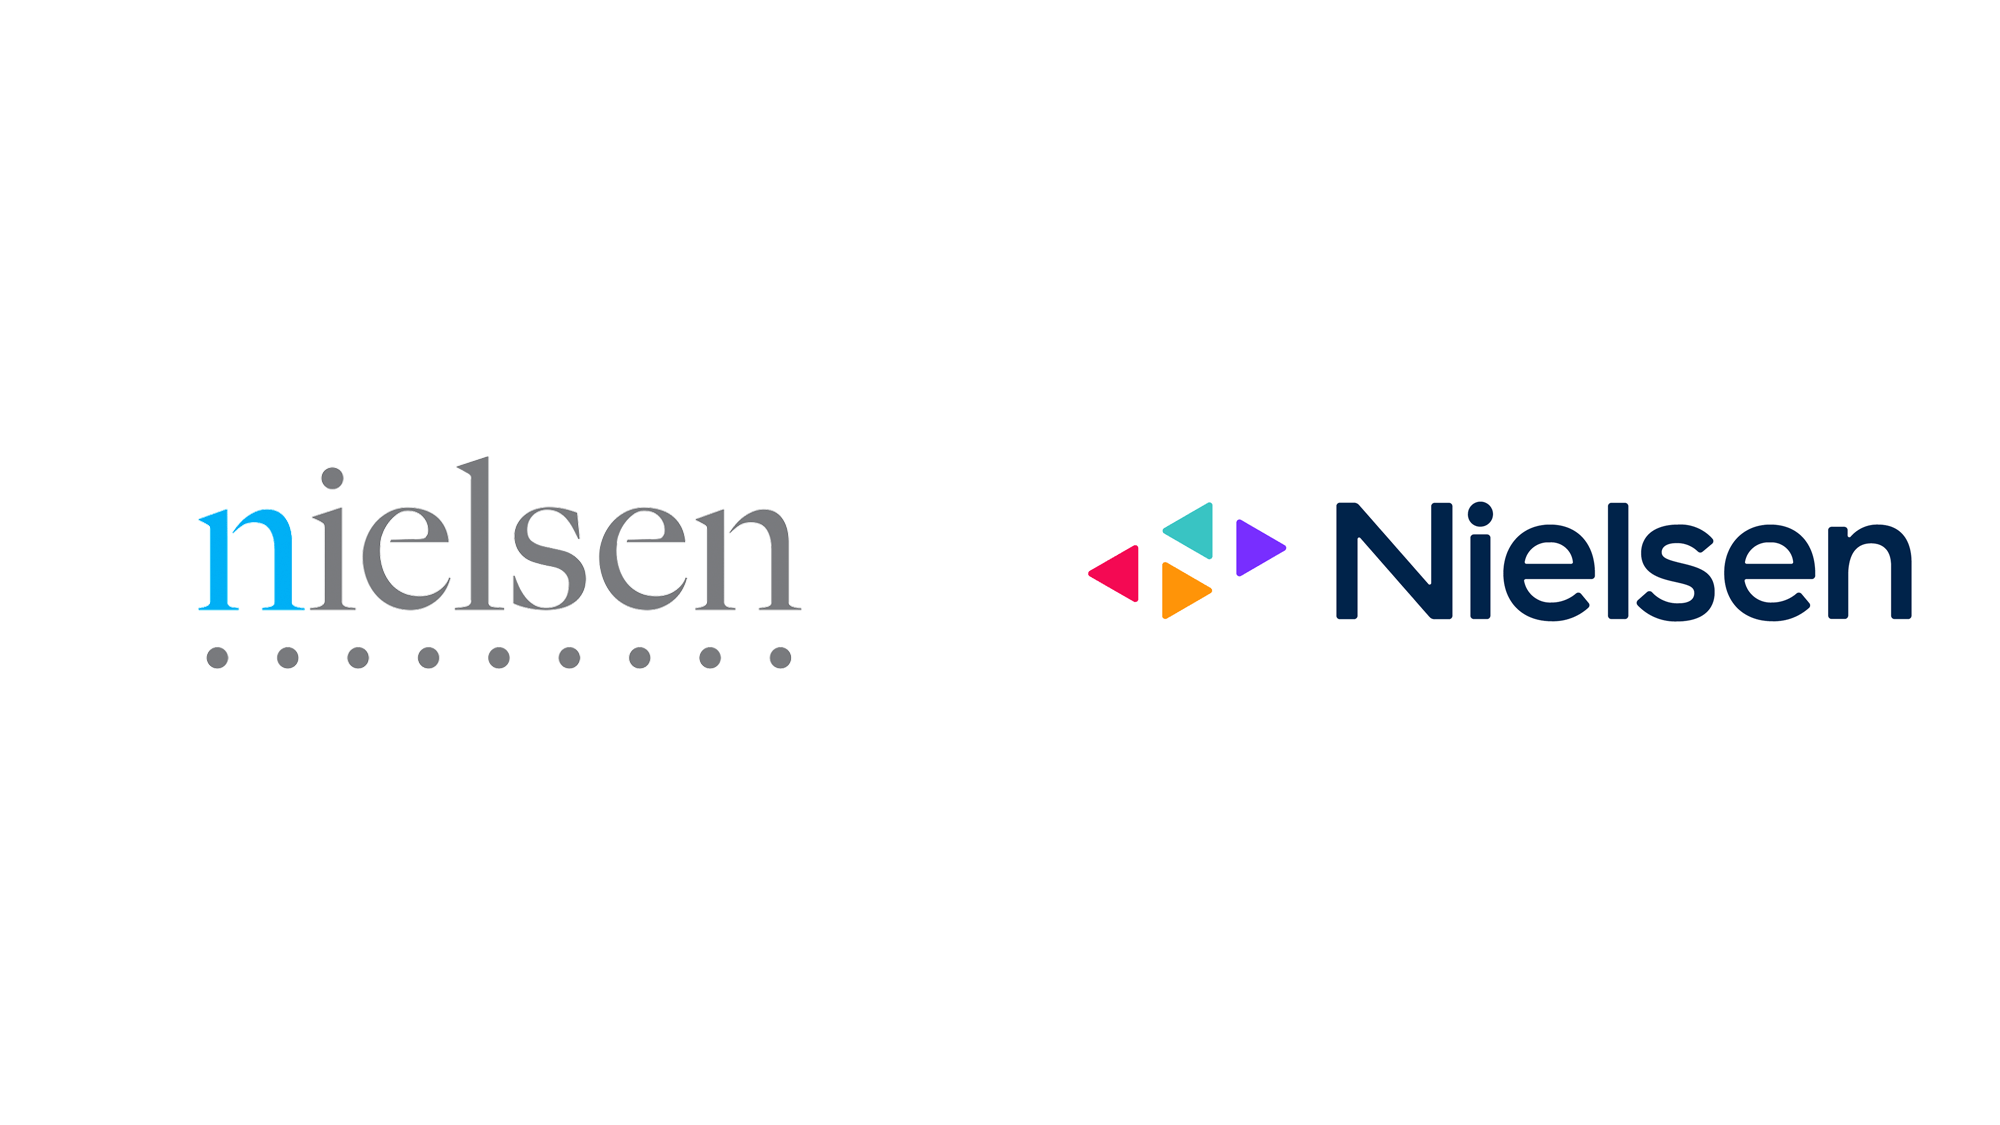 W.G. Nielsen & Co. Financial Advisor to LCDW Wireless Limited Partnership